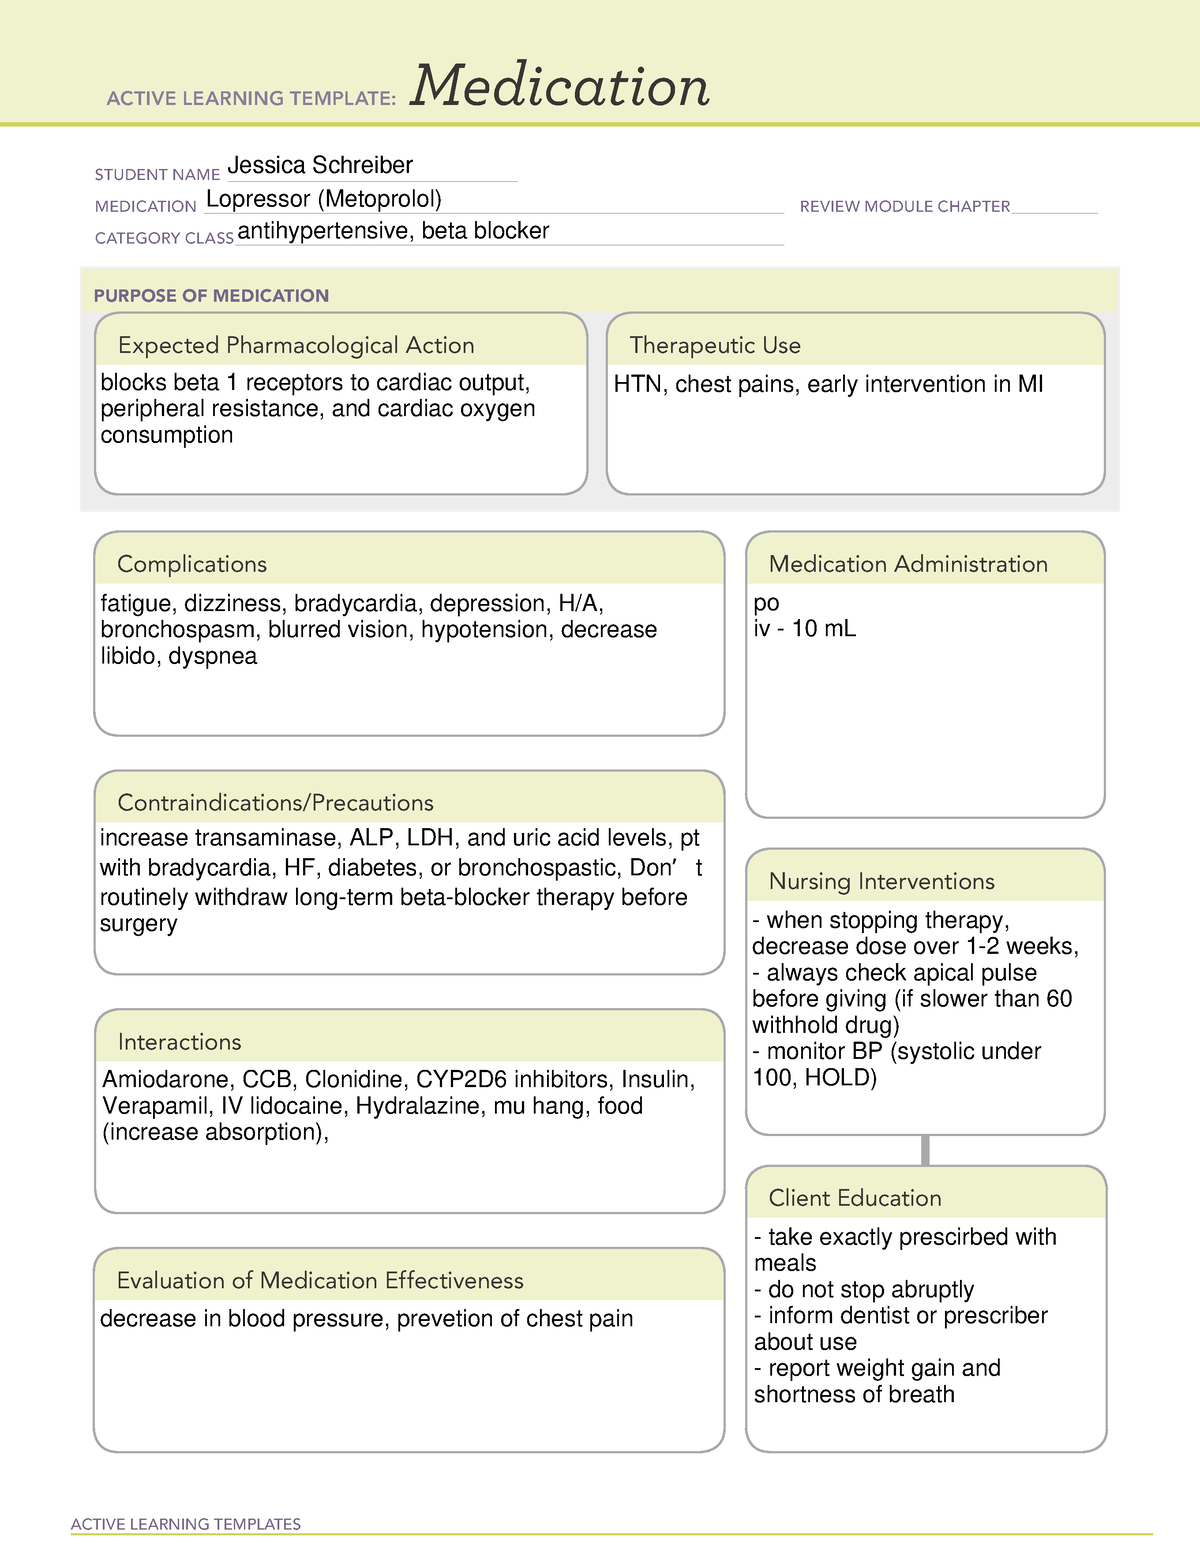 lopressor-metoprolol-med-sheet-ati-active-learning-templates-medication-student-name-studocu